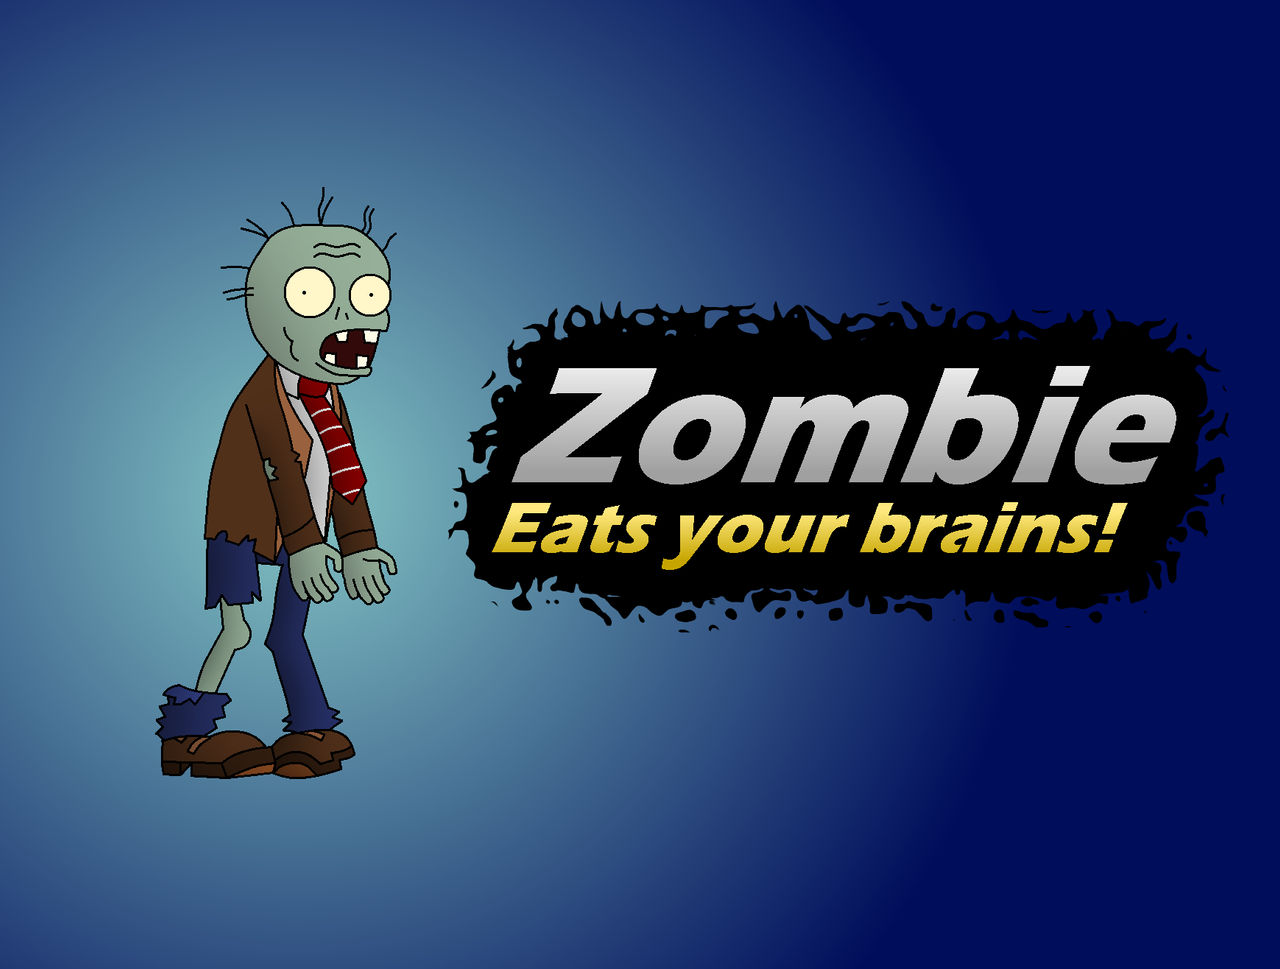 Resultado de imagem para crazy dave pvz png  Plants vs zombies, Plants vs  zombies birthday party, Zombie